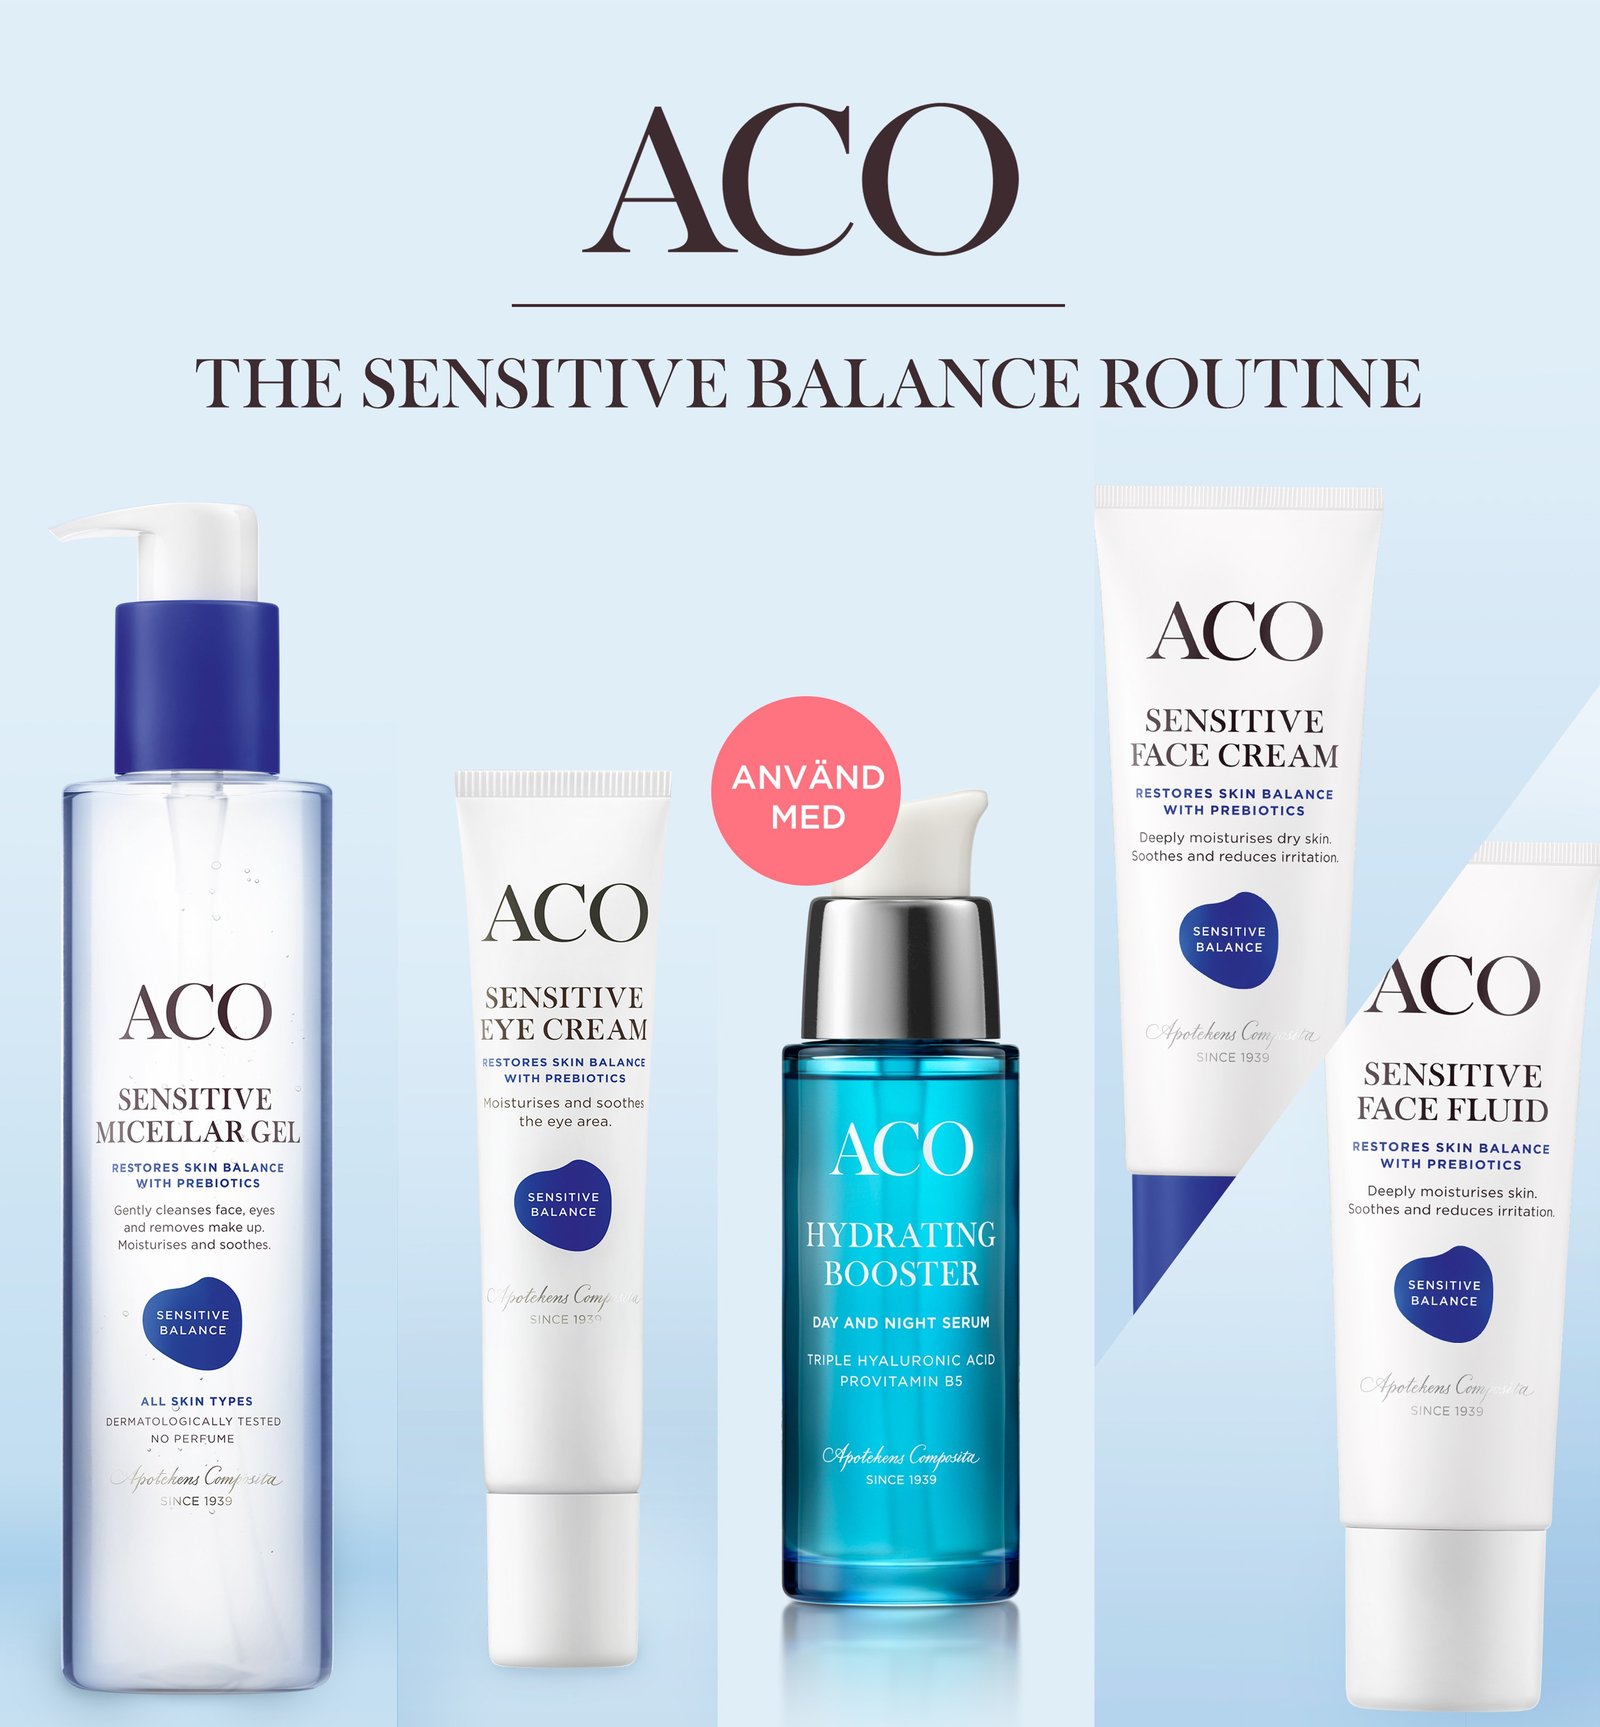 ACO Face Sensitive Balance Micellar Cleansing Gel Ansiktsrengöring 200 ml